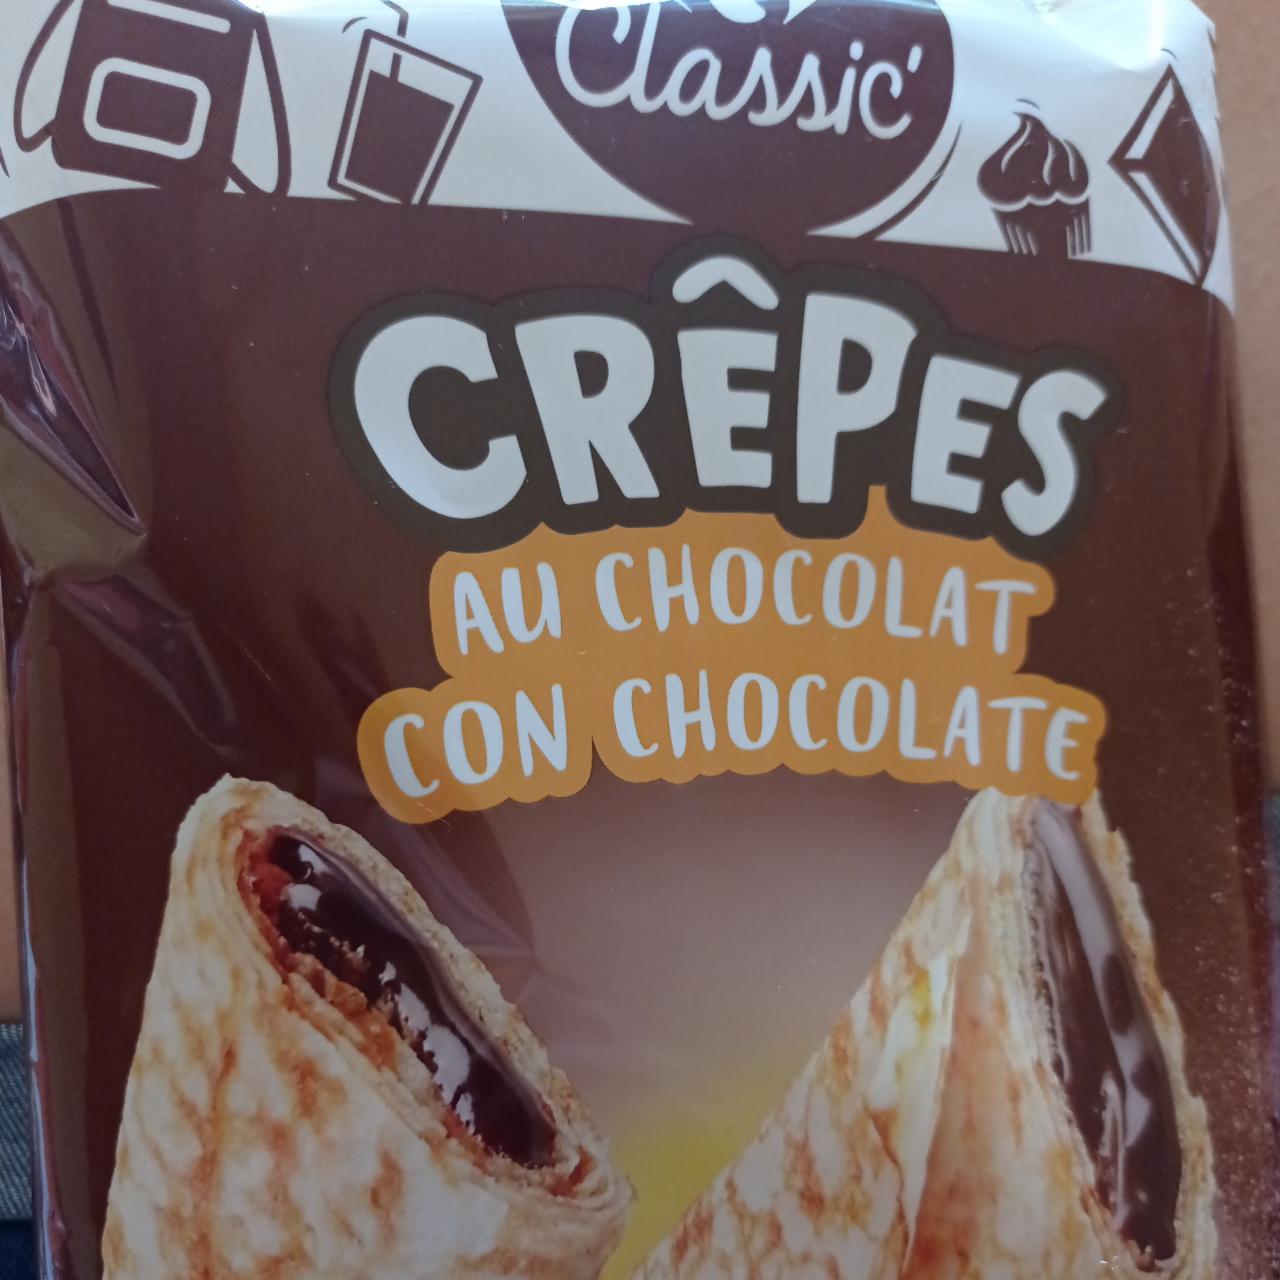 Fotografie - classic’ crêpes au chocolat con chocolate